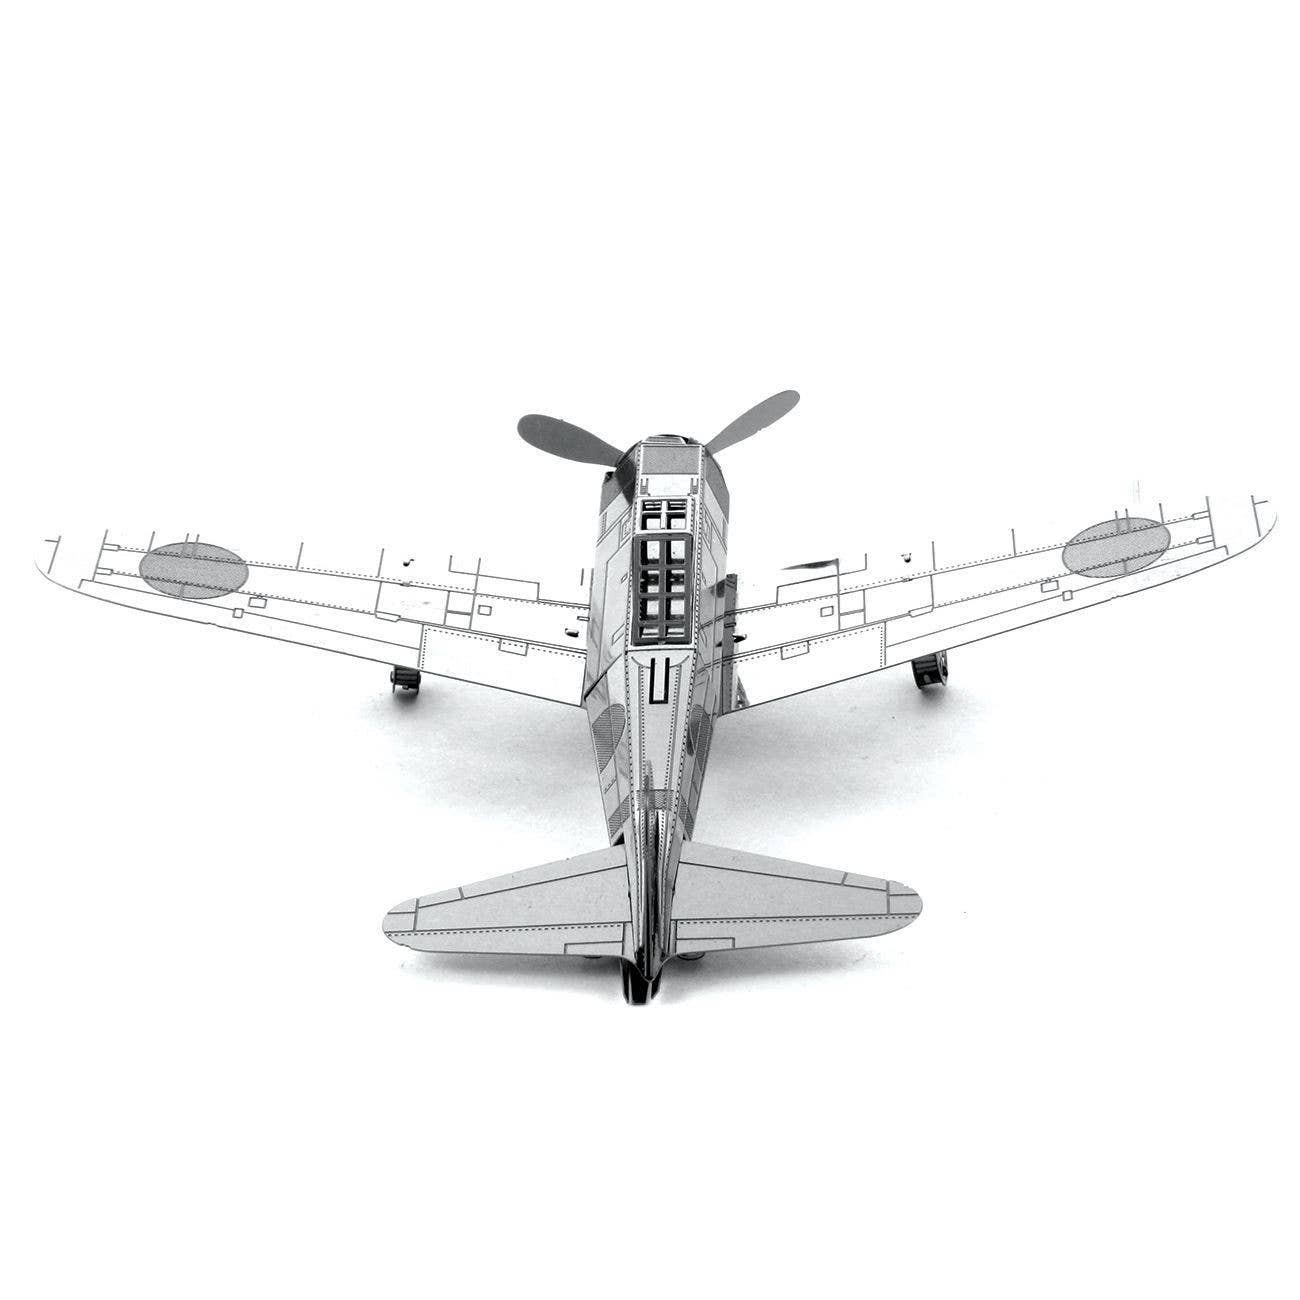 Model Kit Mitsubishi Zero Fighter plane - Einstein's Attic